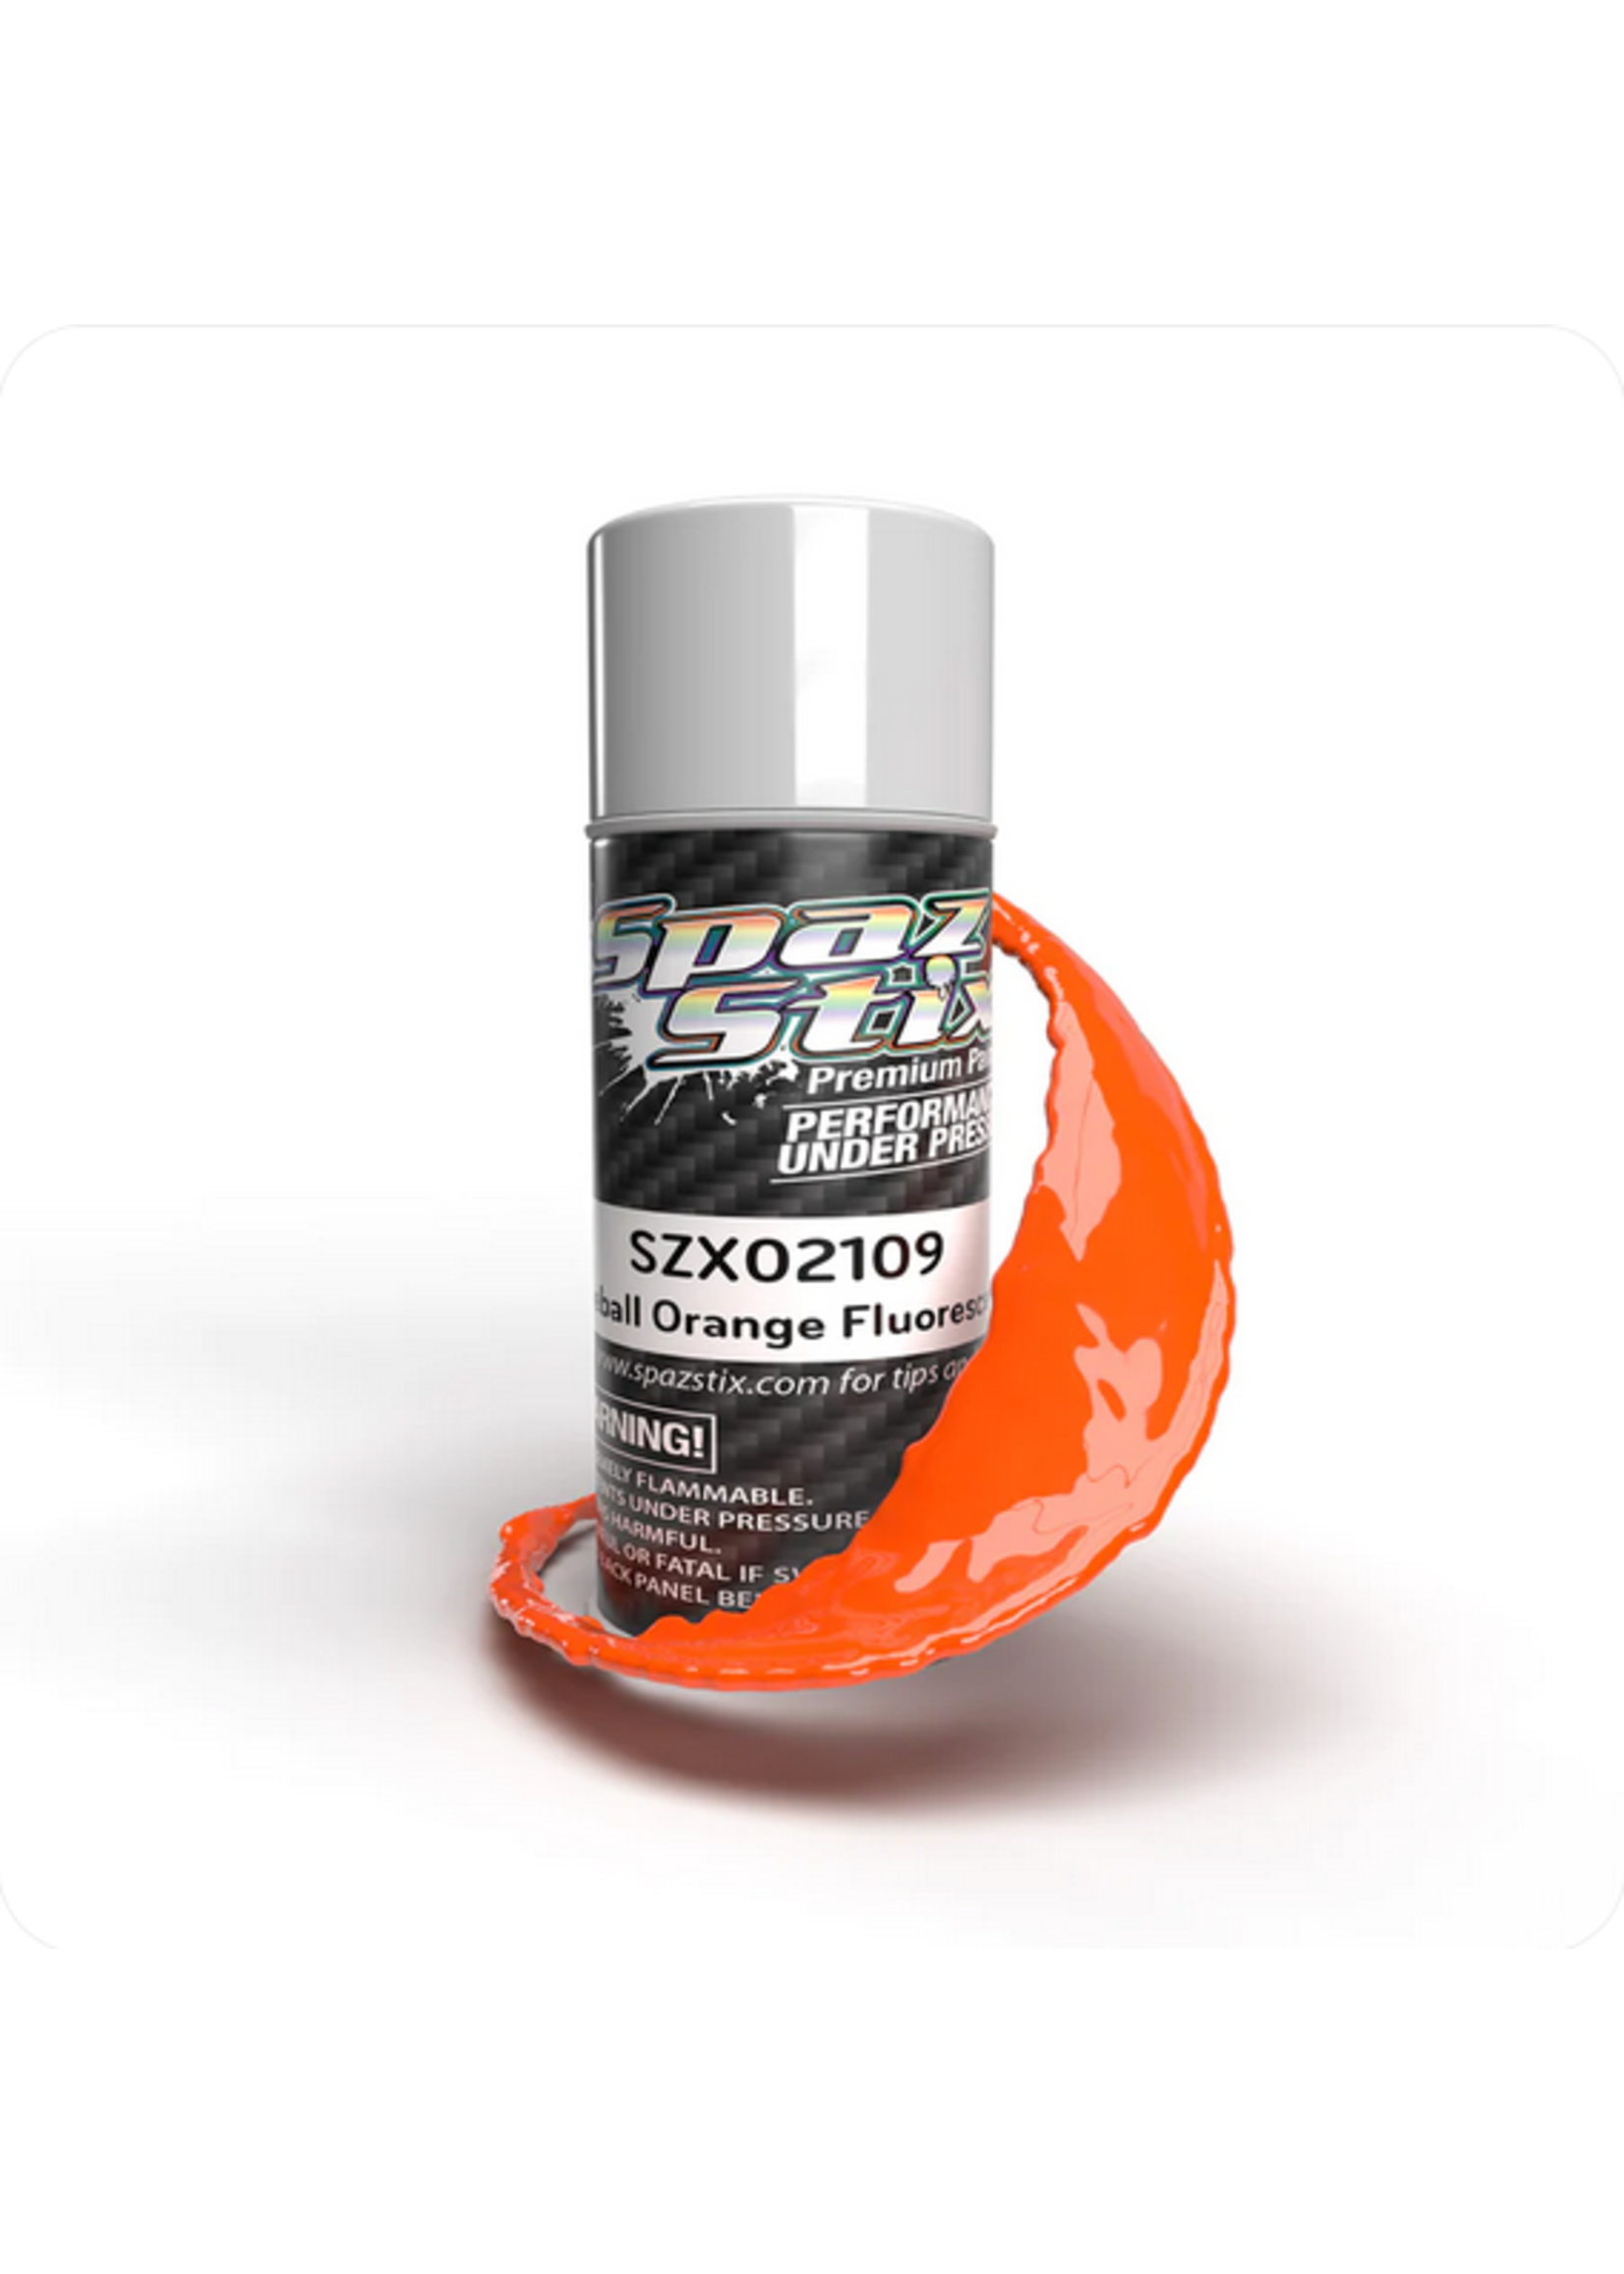 Spaz Stix SZX02109 Spaz Stix Fireball Orange Fluorescent Aerosol Paint, 3.5oz Can